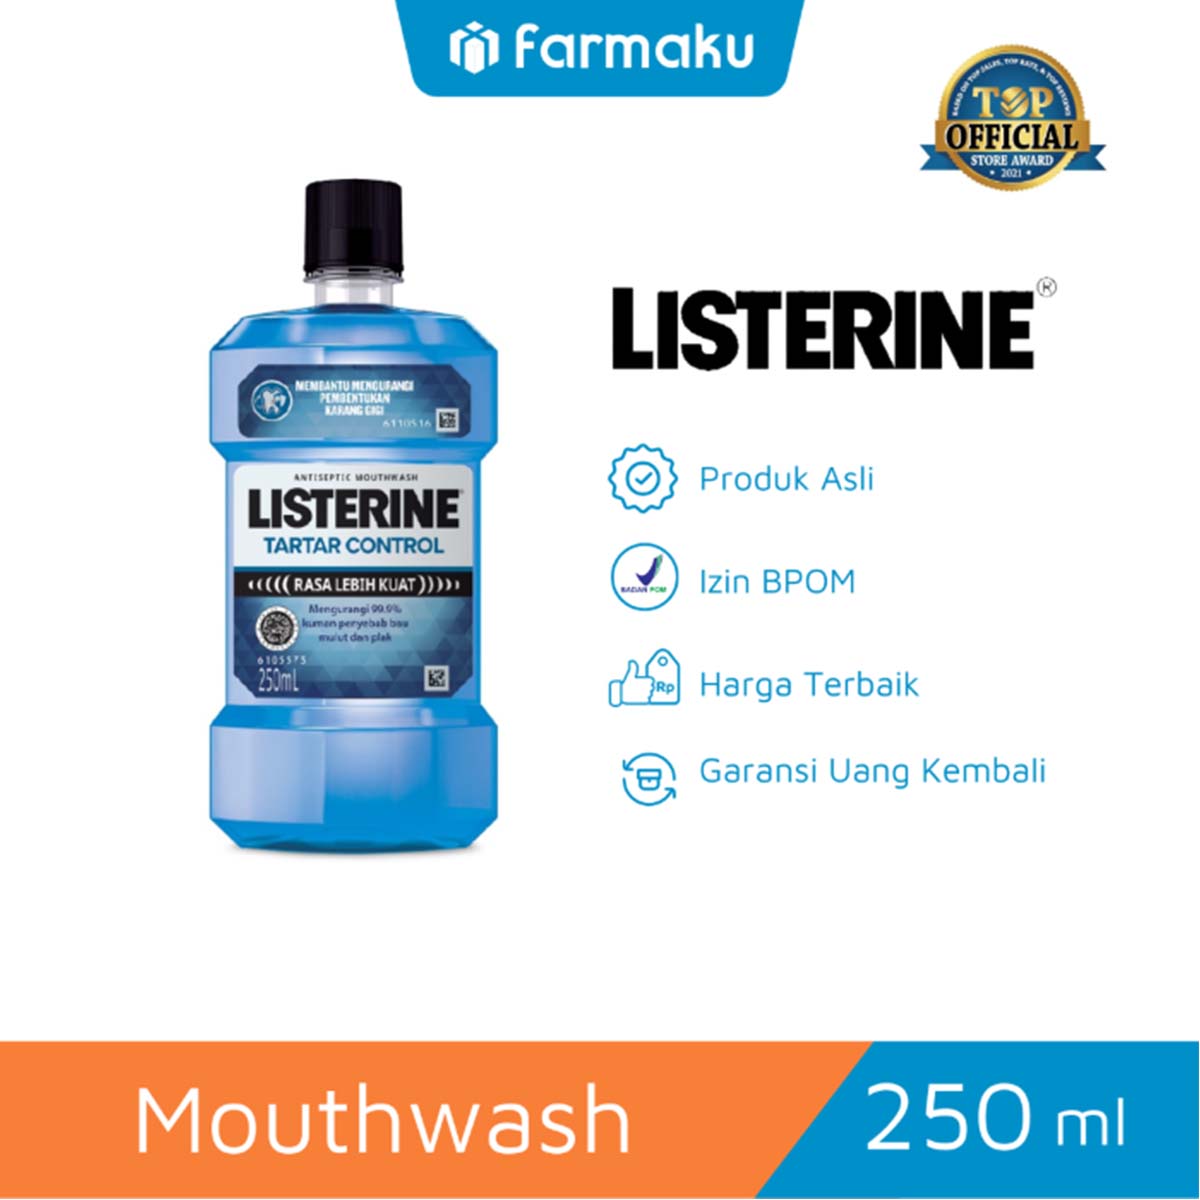 Listerine Tartar Control